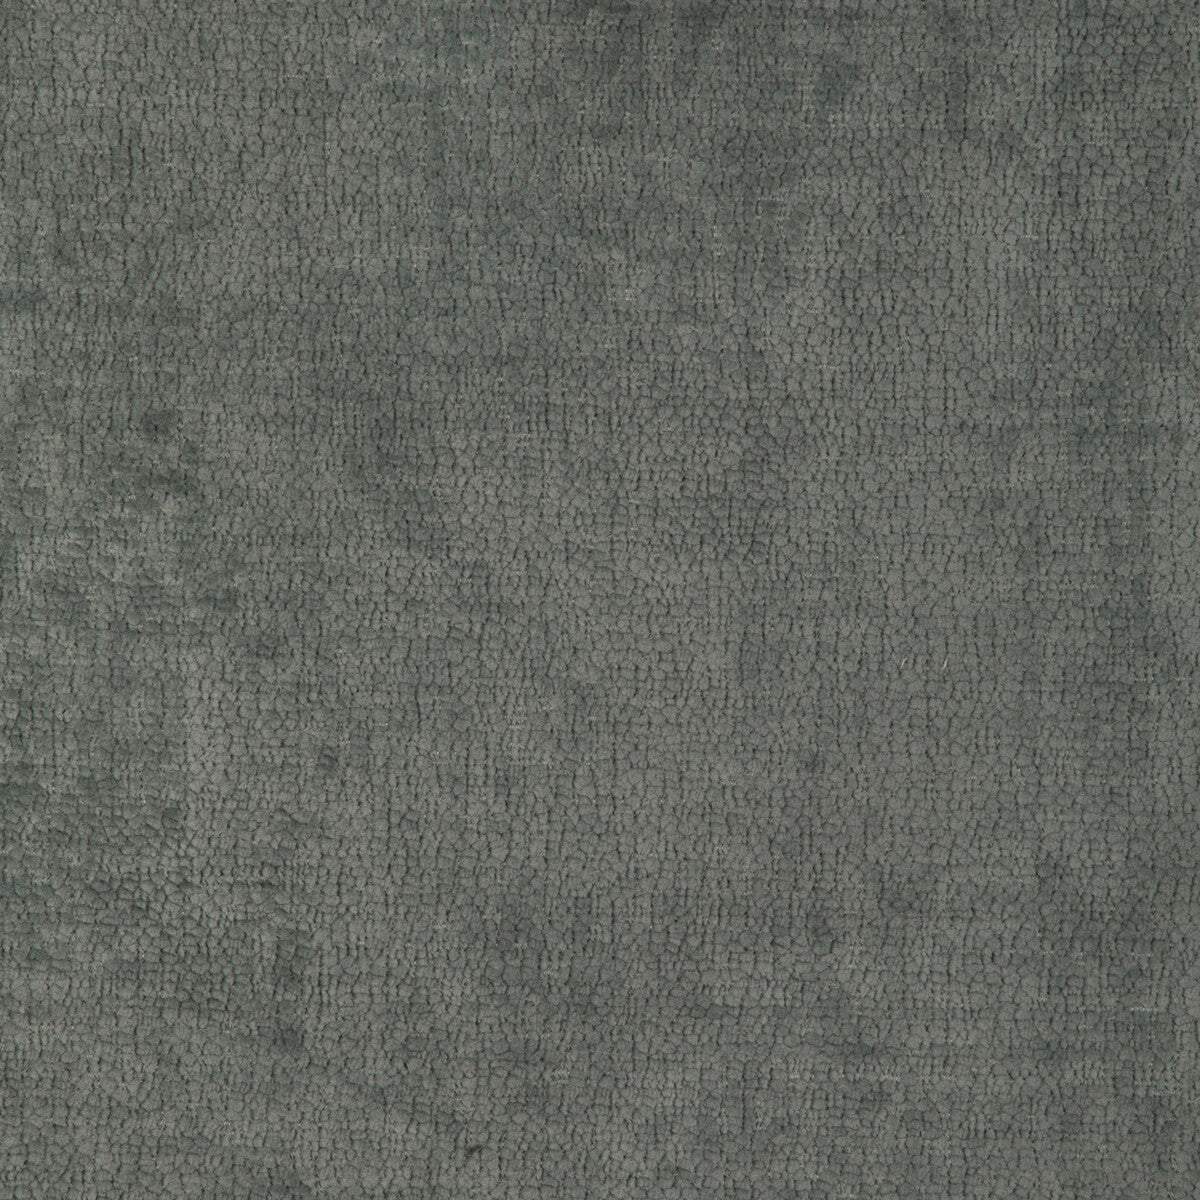 Kravet Smart fabric in 36997-52 color - pattern 36997.52.0 - by Kravet Smart